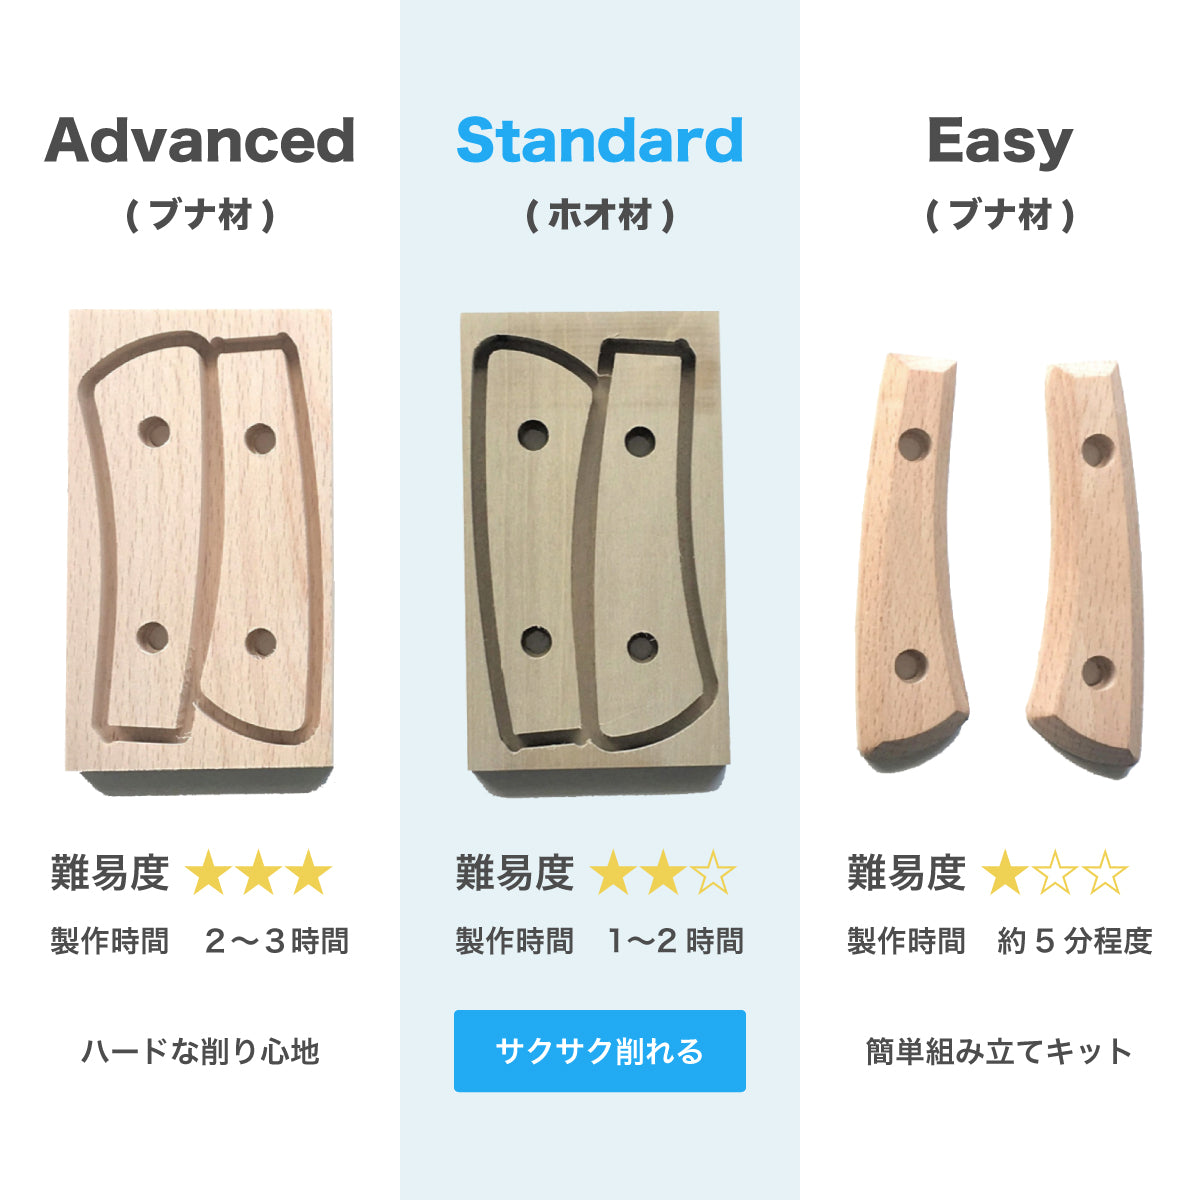 It's my knife Craft用 ハンドル材 ホオ Standard